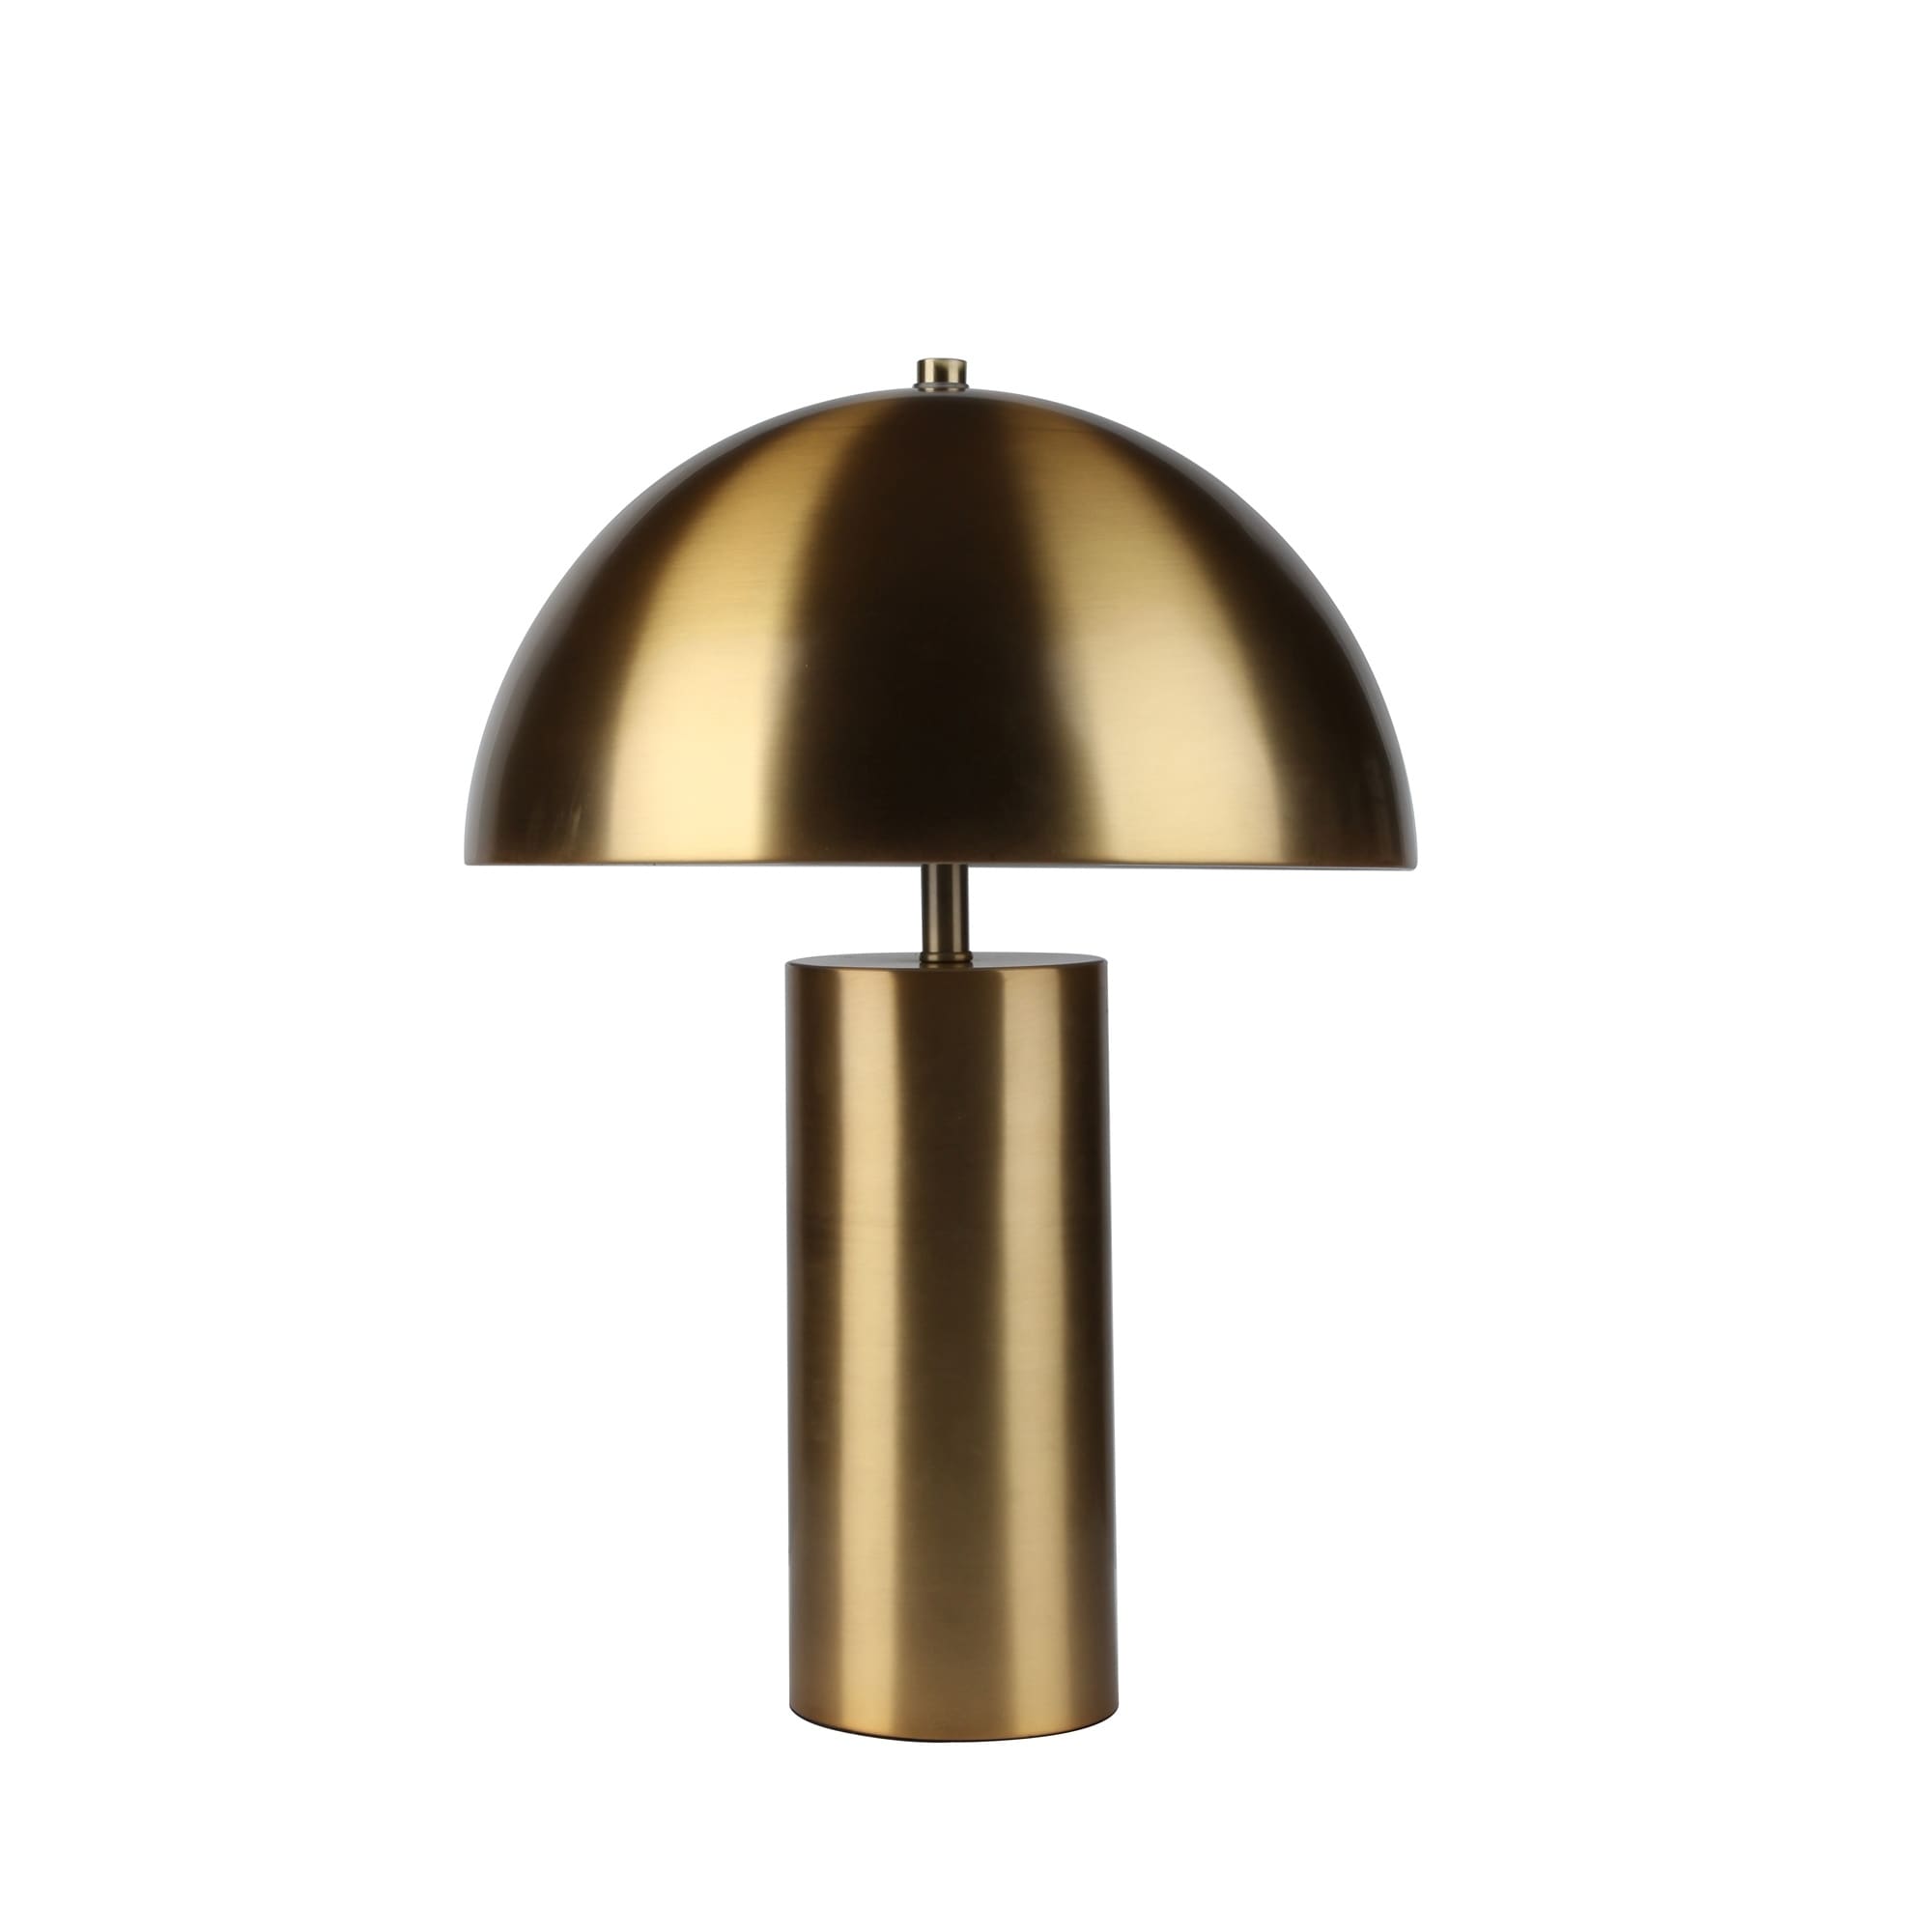 gold metal table lamp